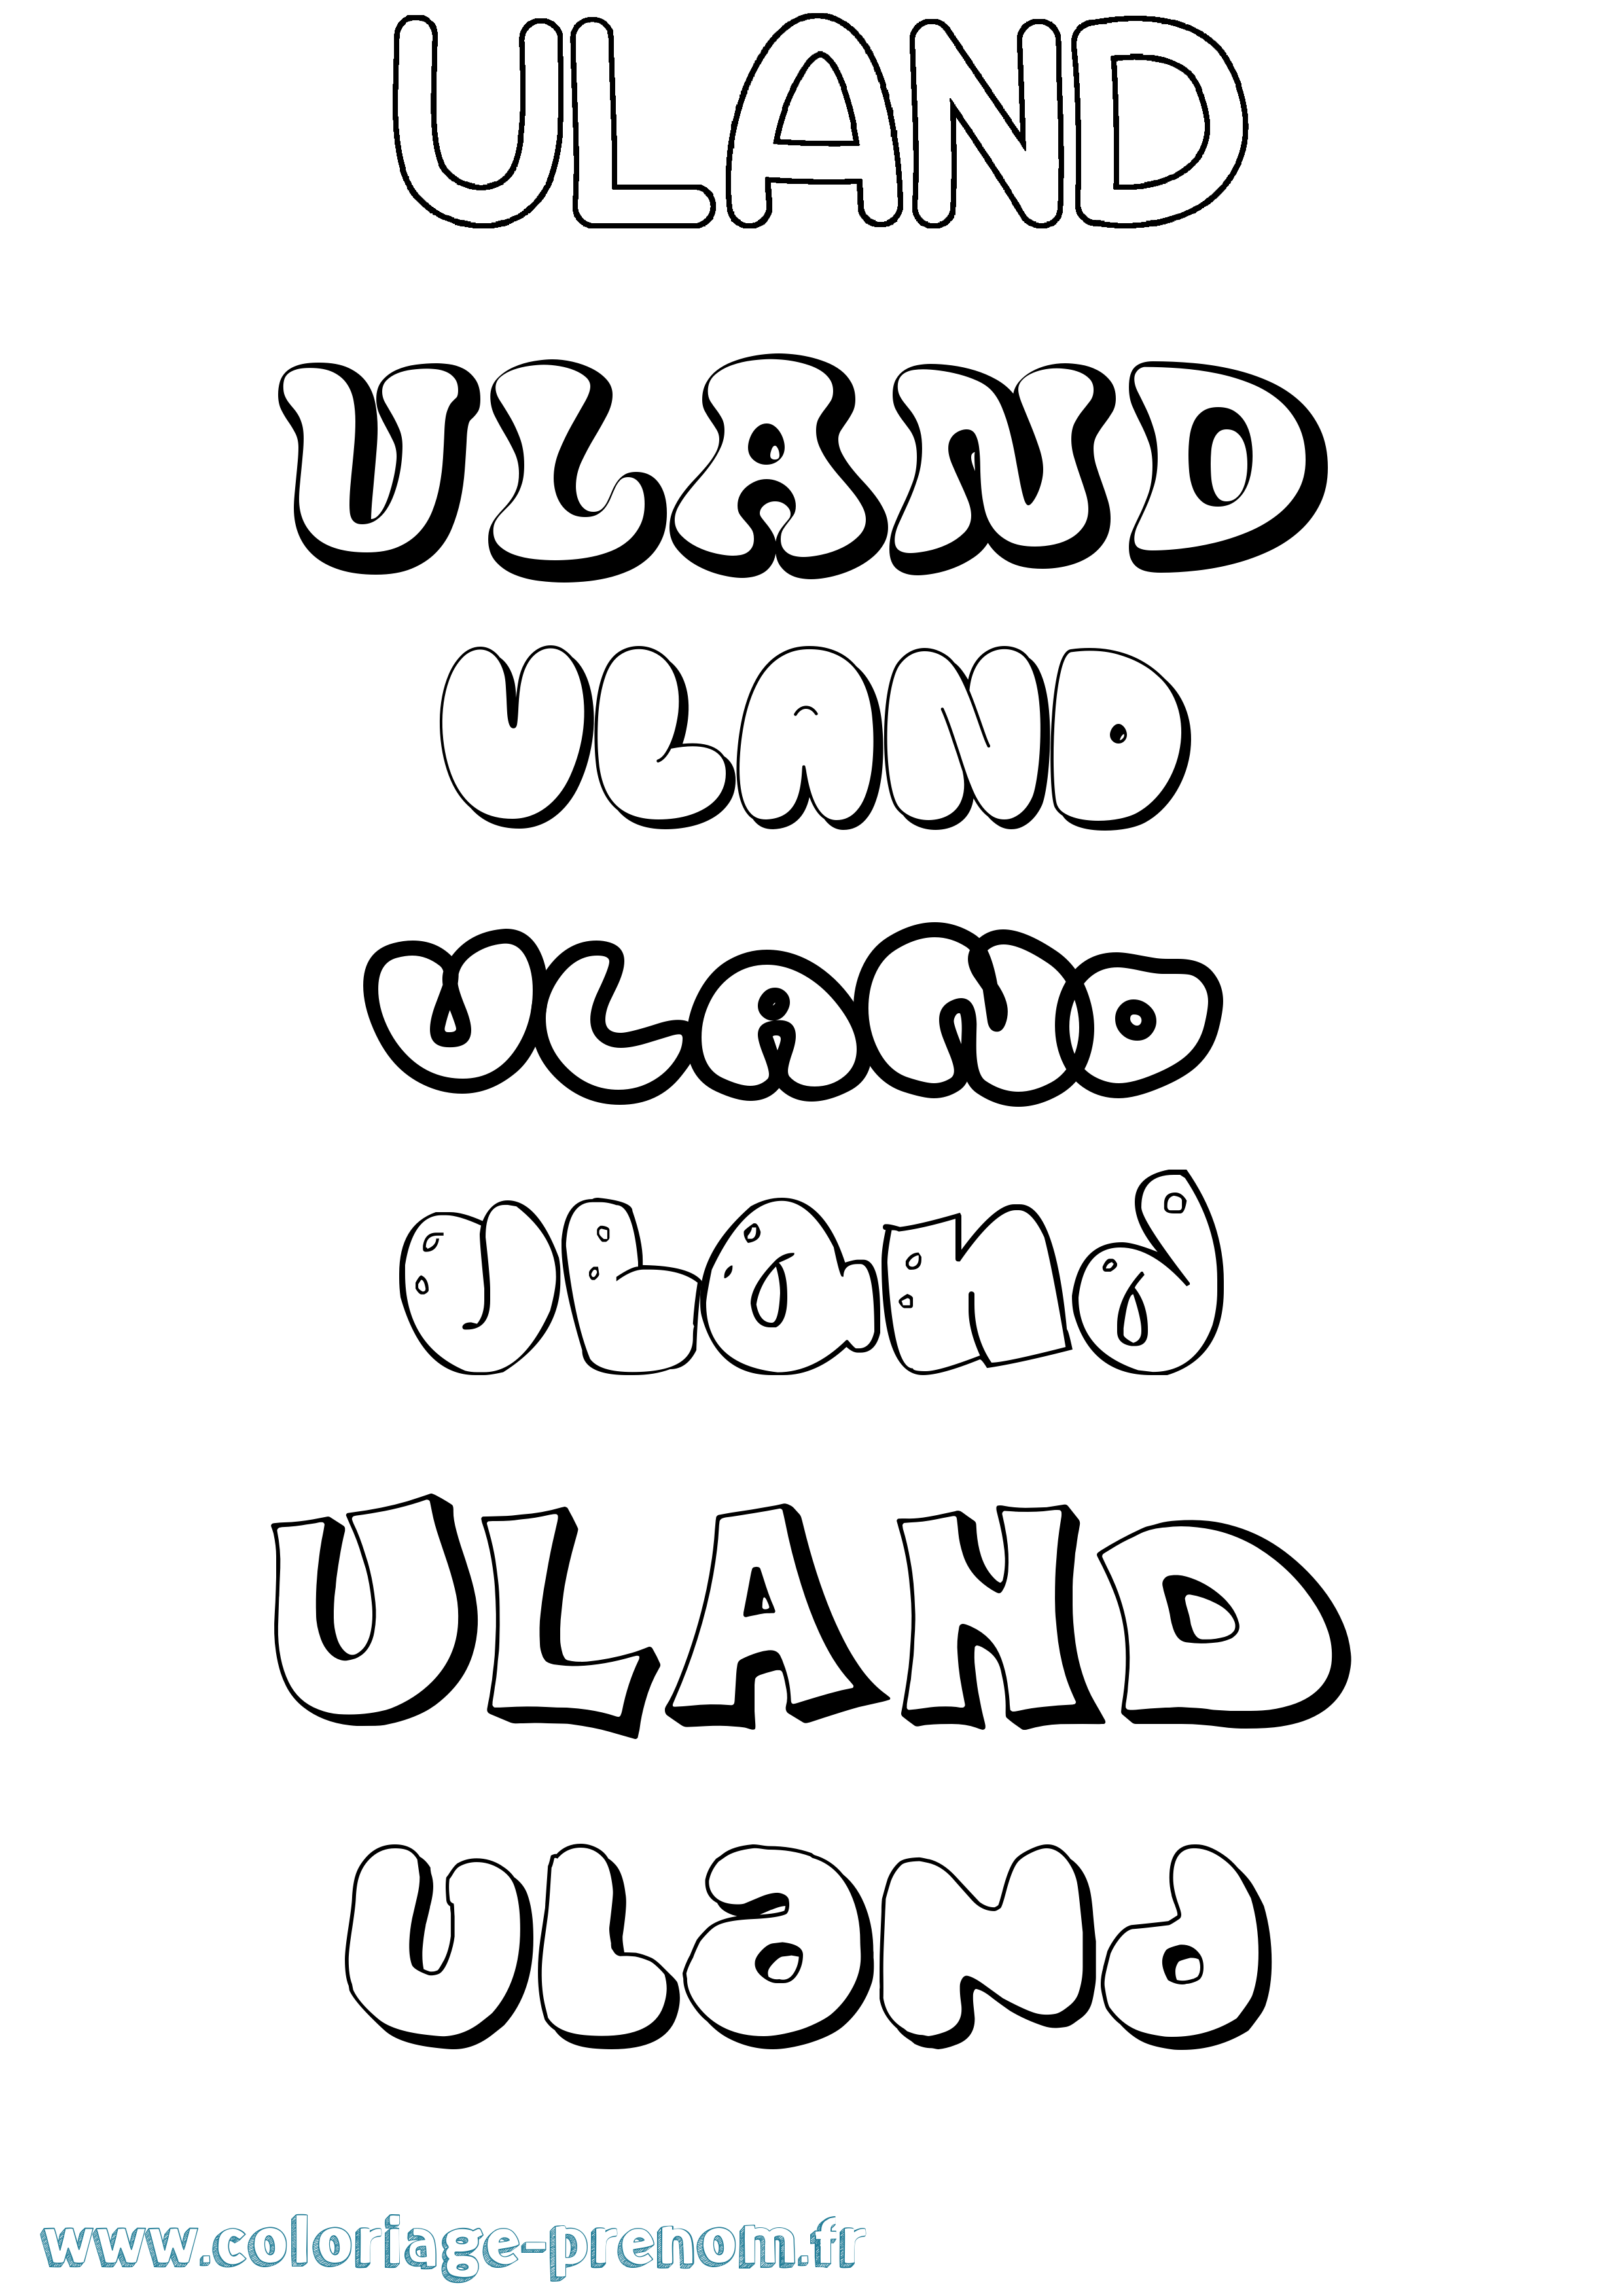 Coloriage prénom Uland Bubble